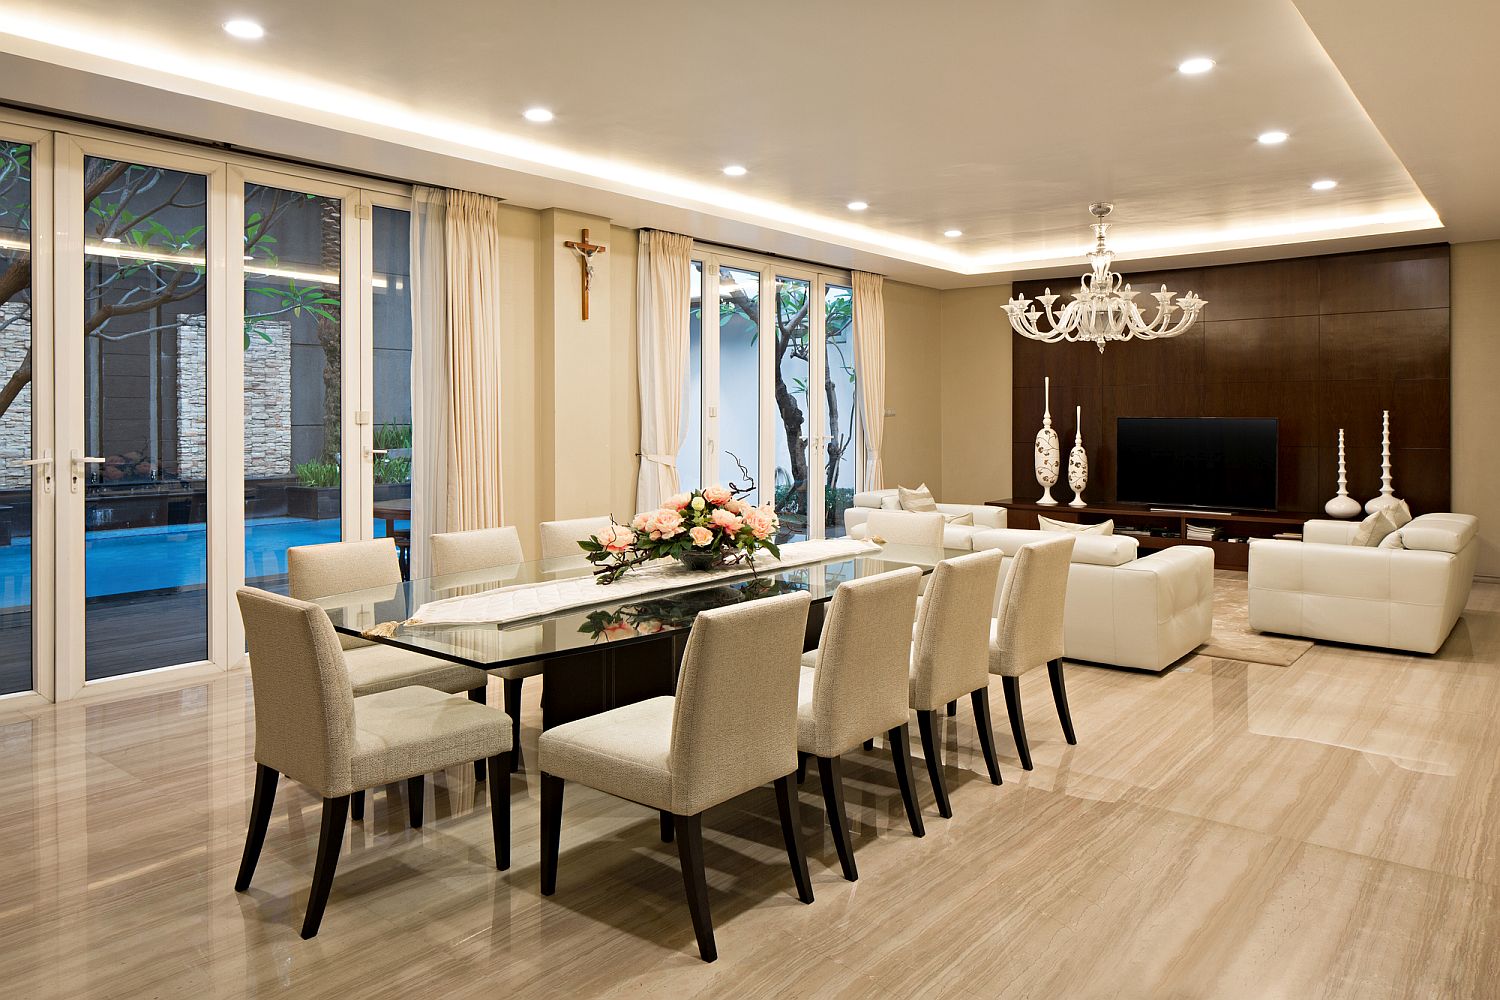 Beautiful and elegant modern dining room in beige